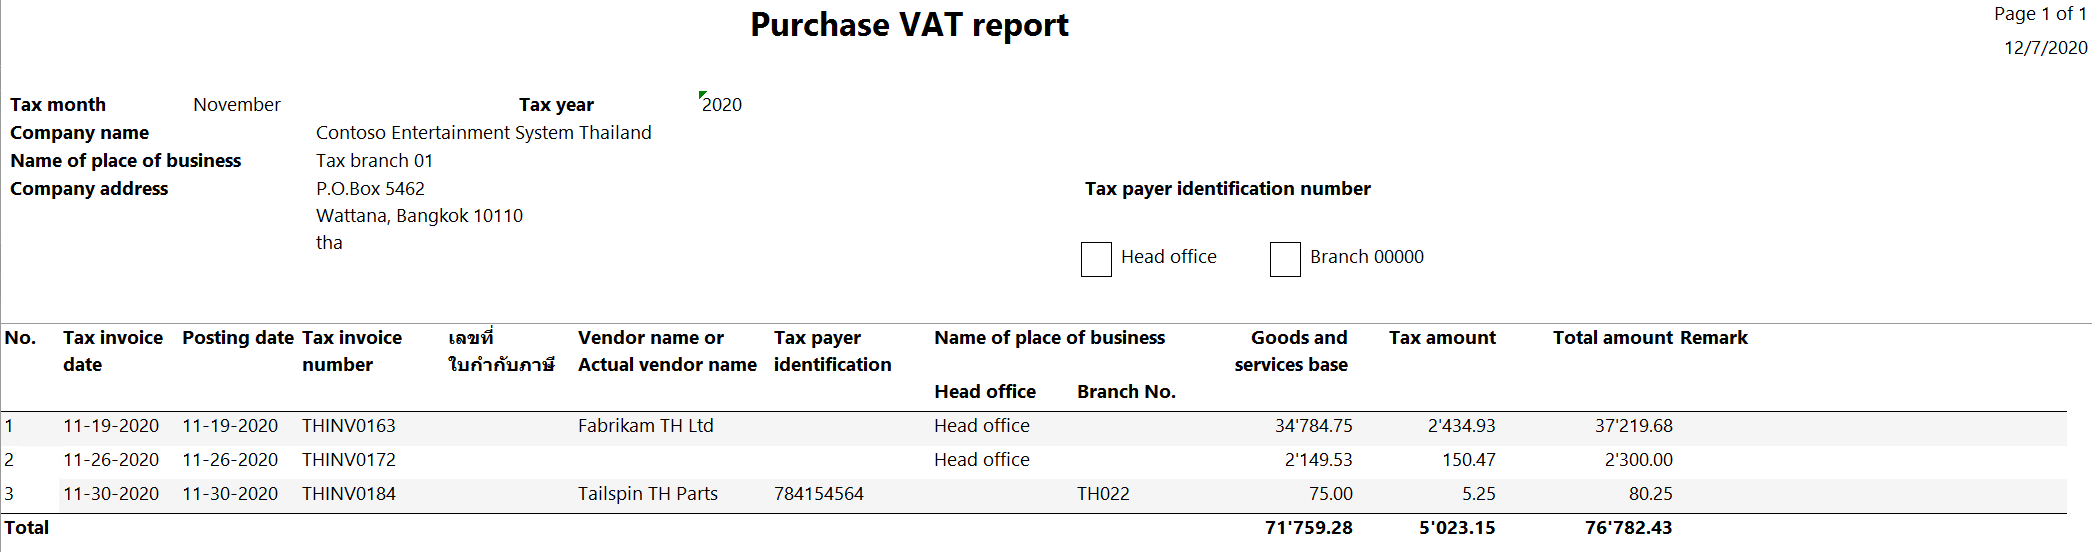 Purchase VAT report.